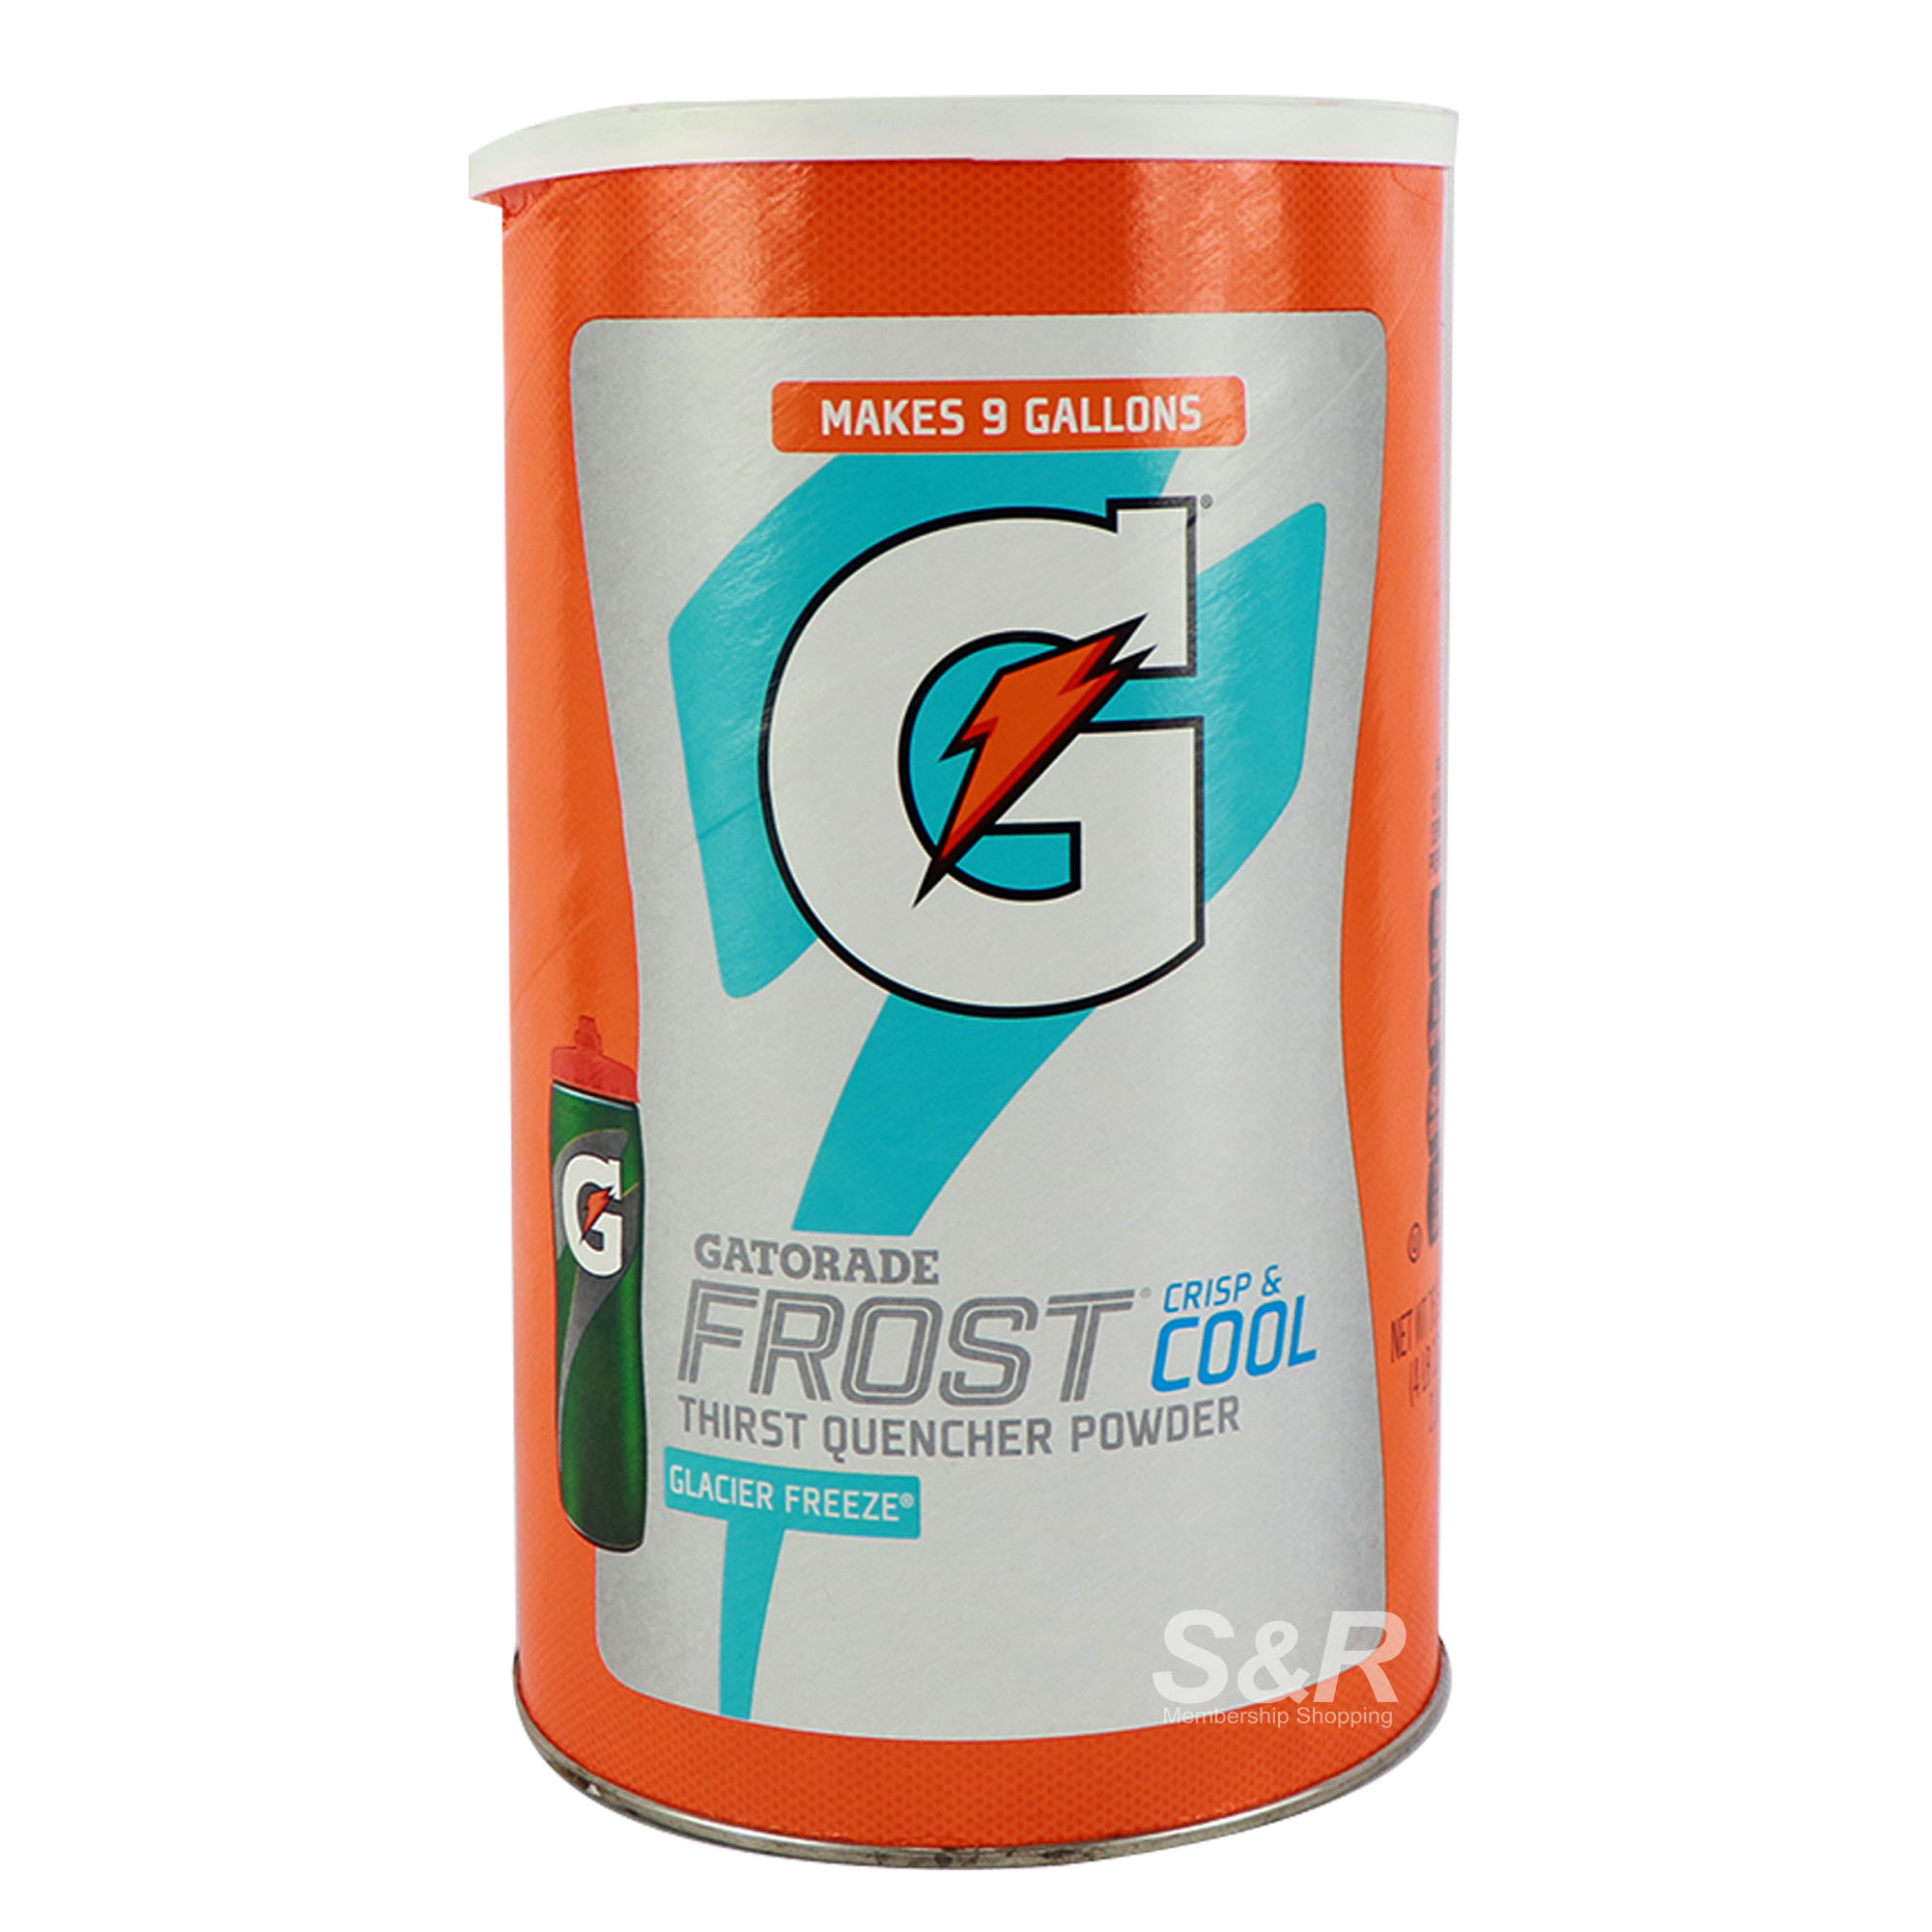 Gatorade Frost Cool Crisp & Cool Thirst Quencher Powder Glacier Freeze 2.16kg